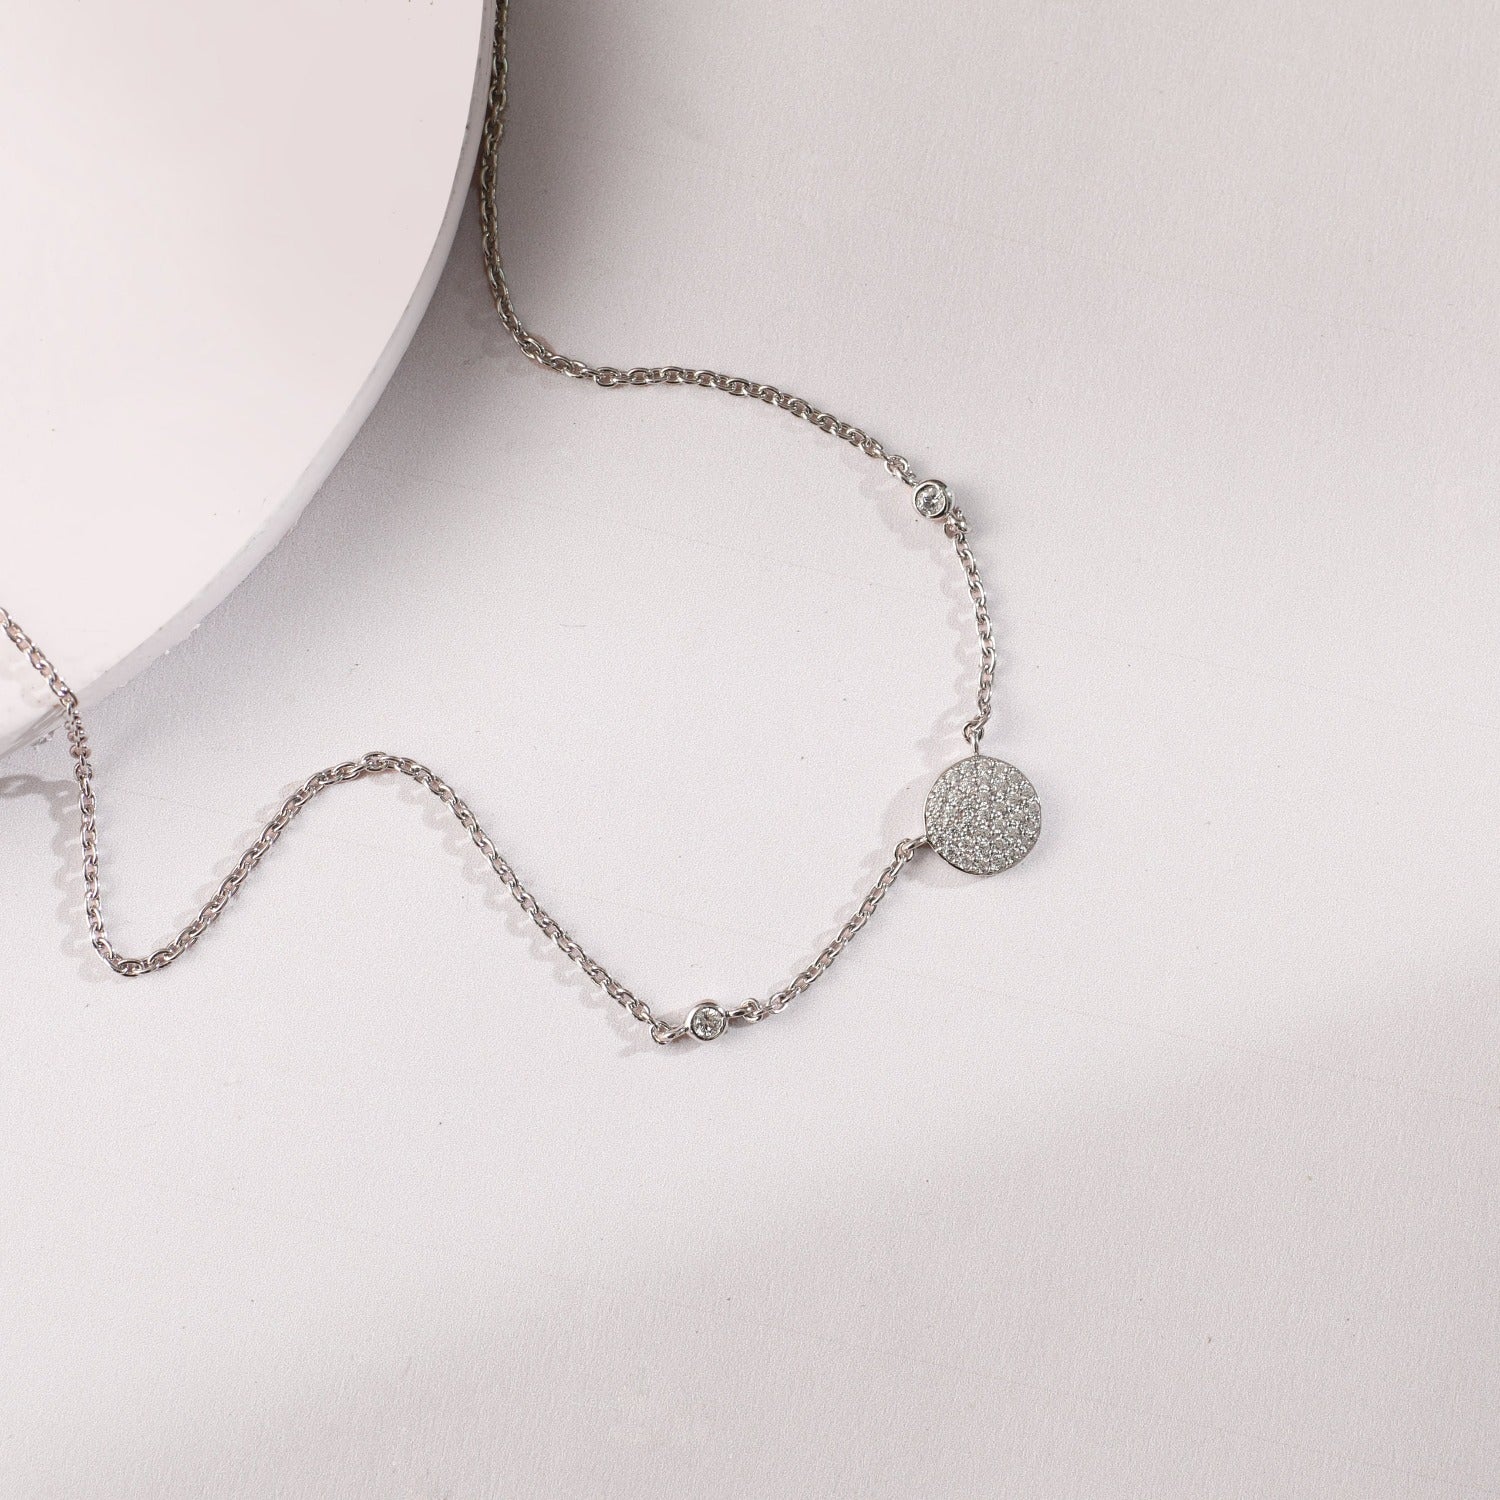 Single CZ Charm Delicate Silver Necklace